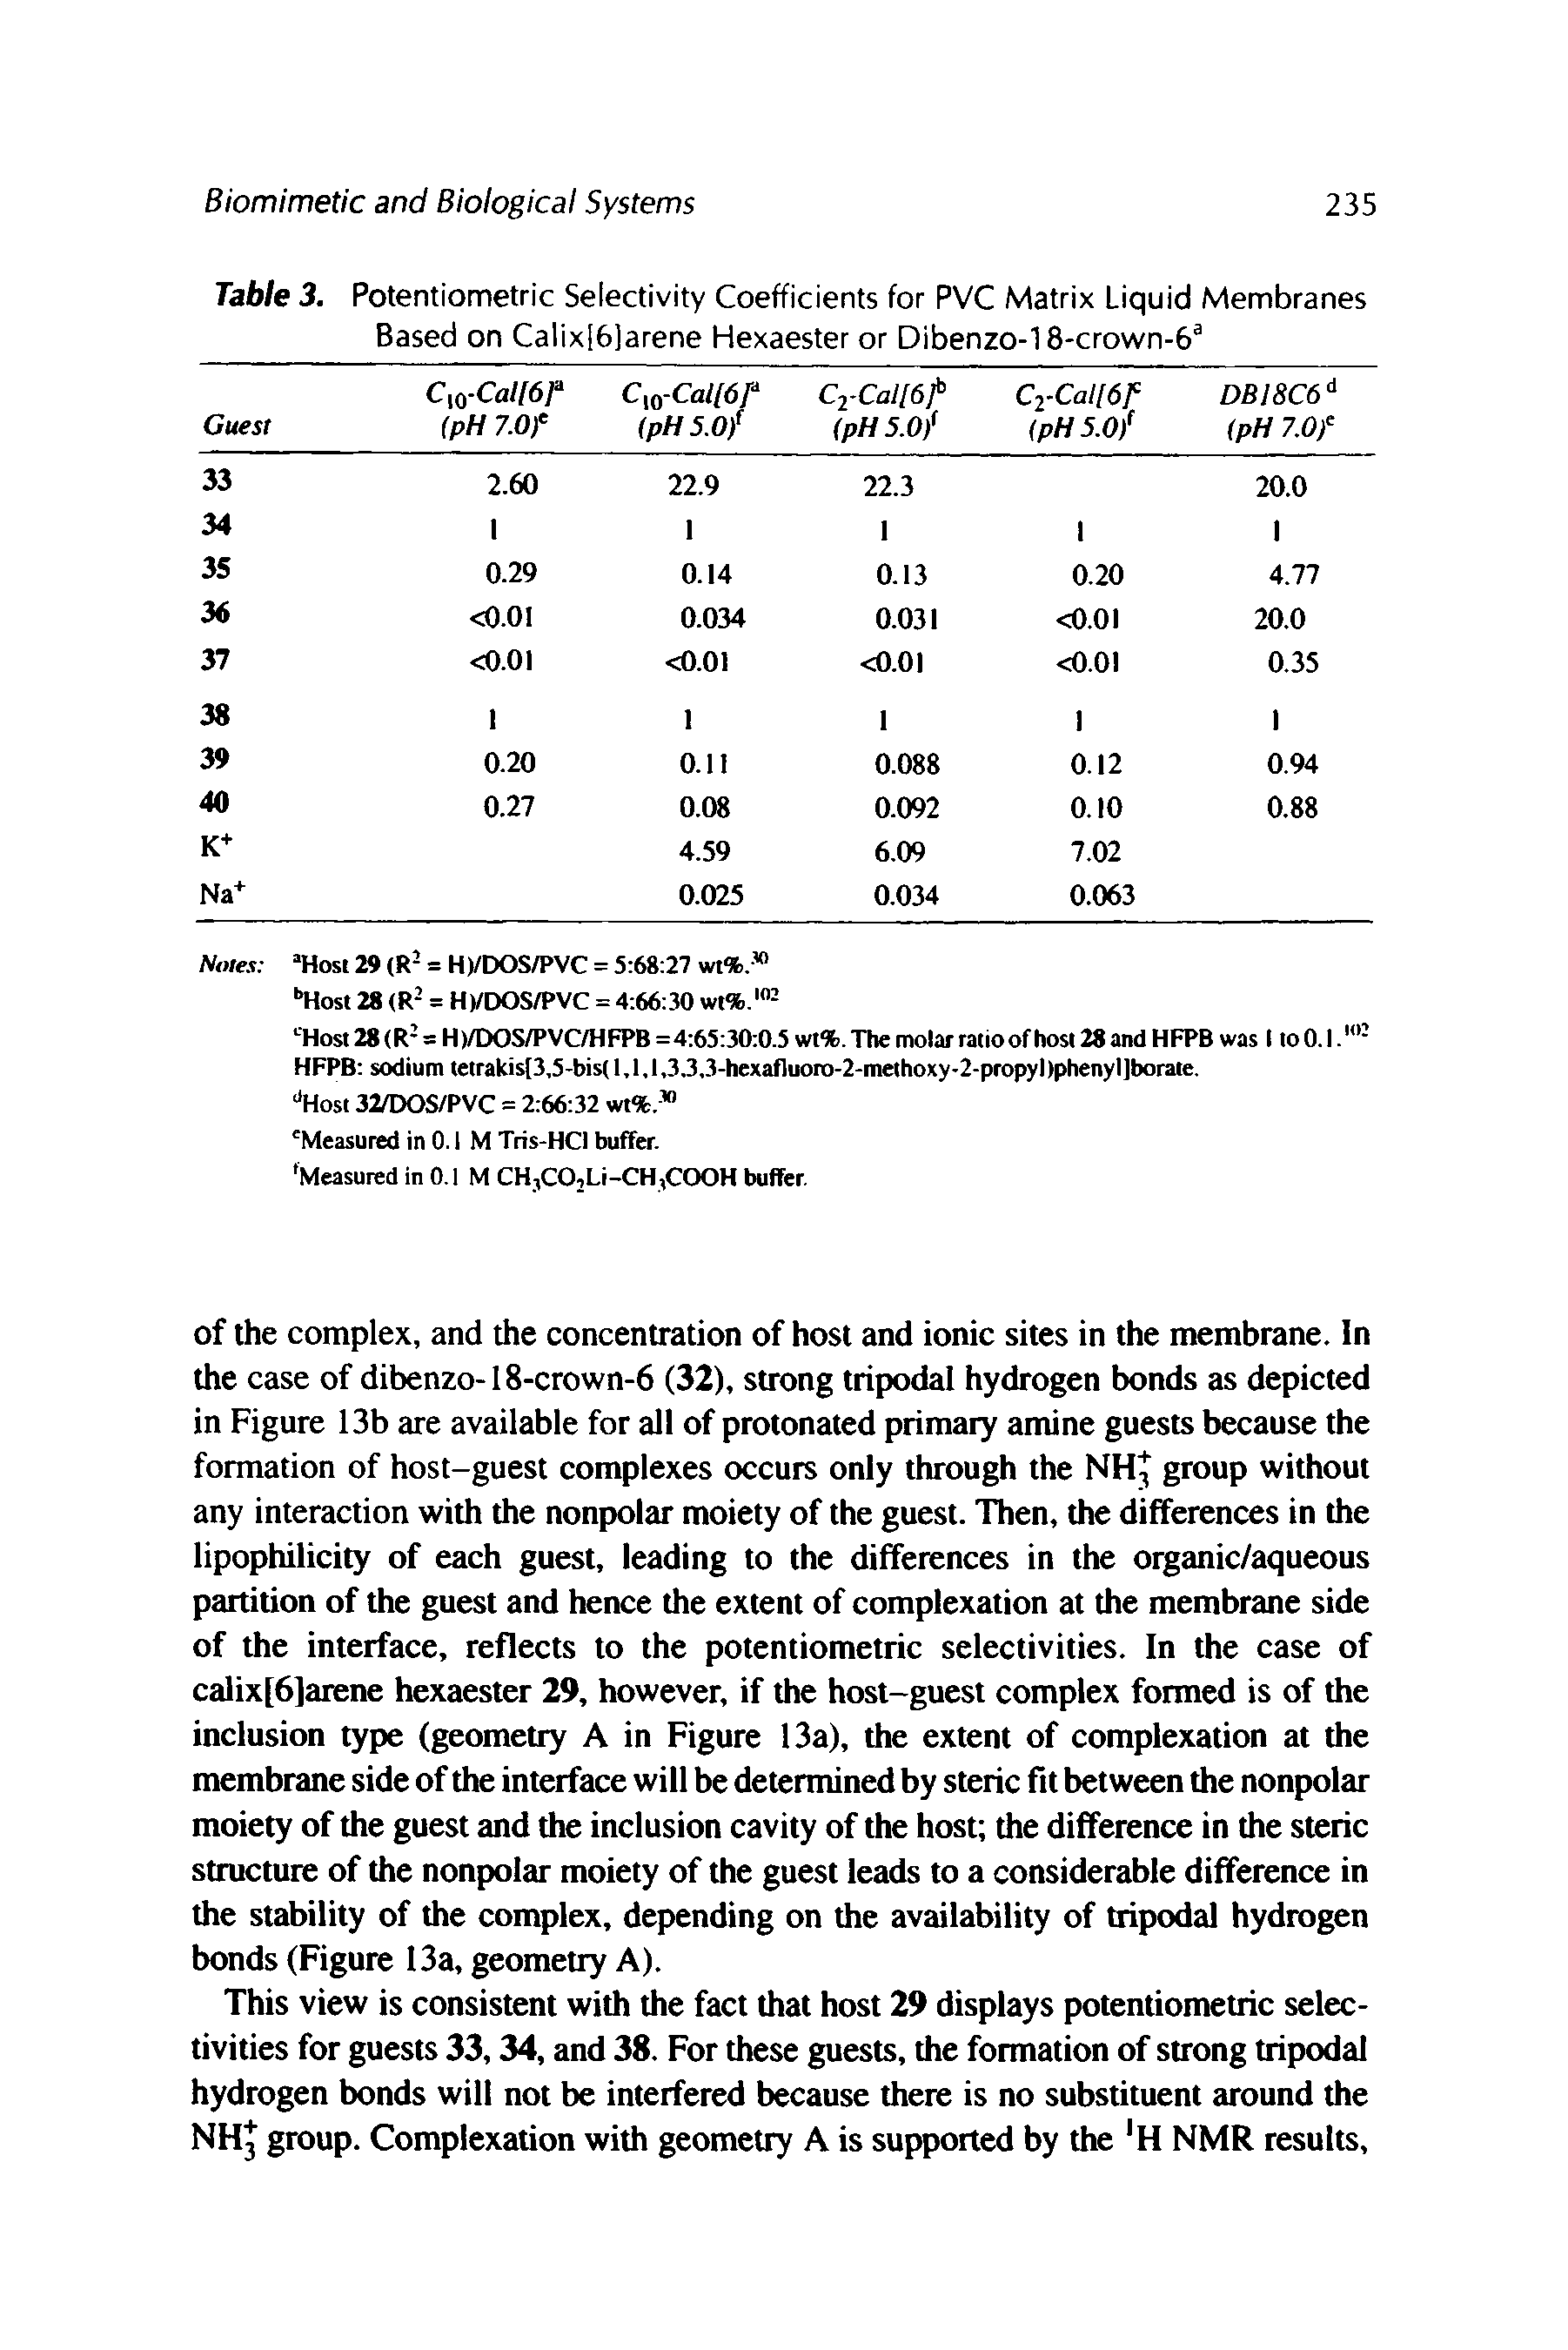 Table 3. Potentiometric Selectivity Coefficients for PVC Matrix Liquid Membranes Based on Calixl6)arene Hexaester or Dibenzo-18-crown-6 ...